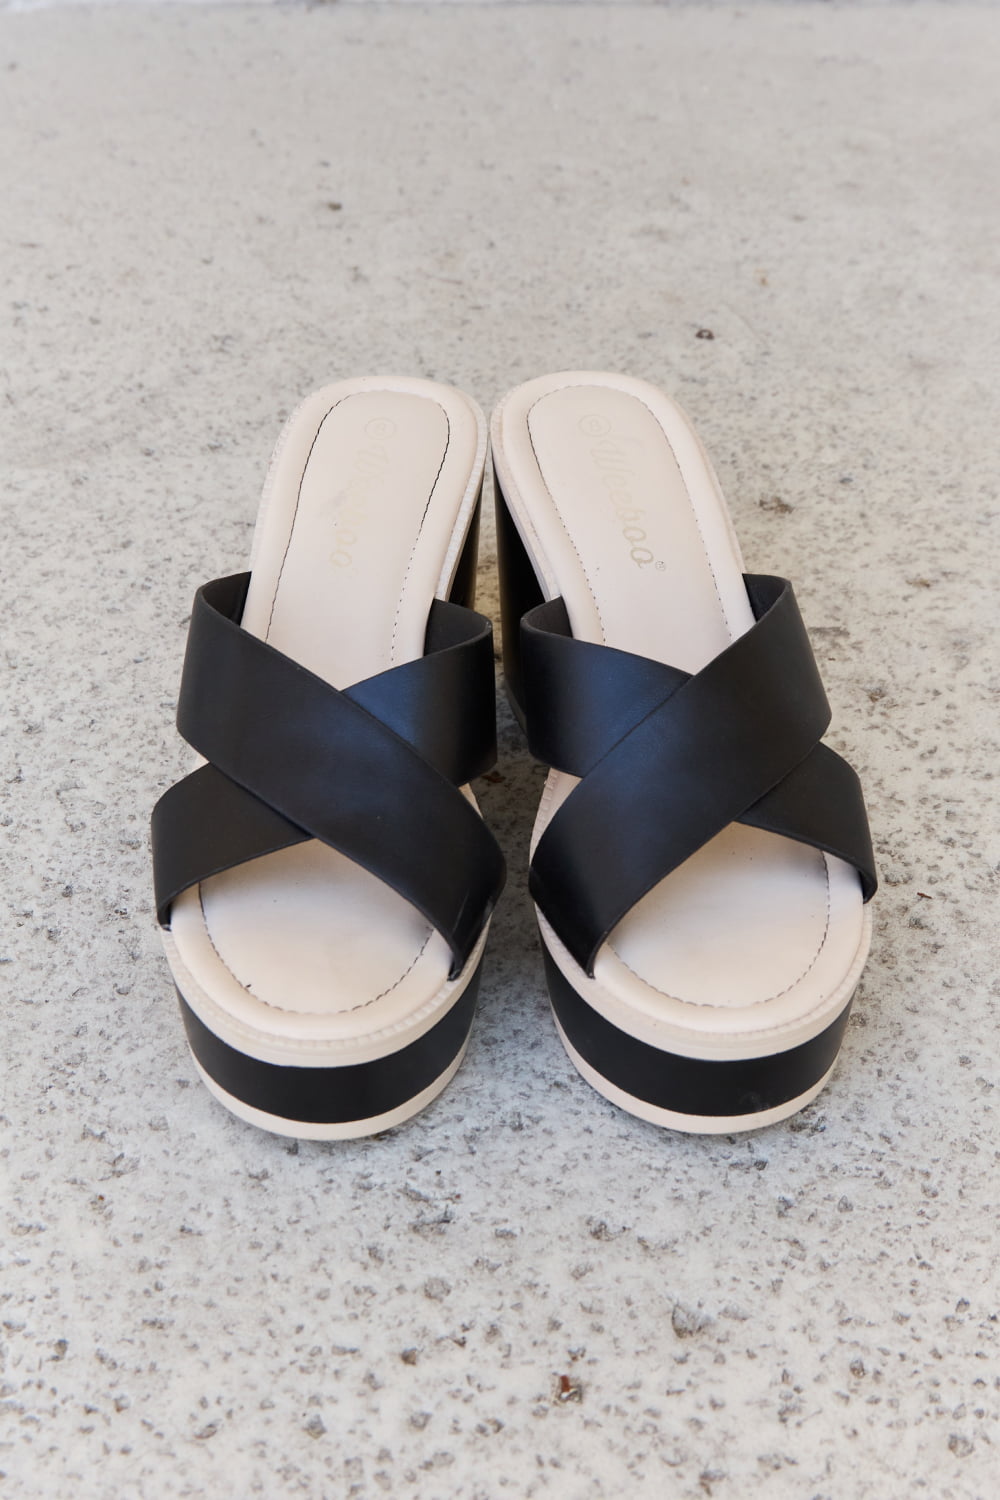 Contrast Platform Sandals in BlackSandalsWeeboo